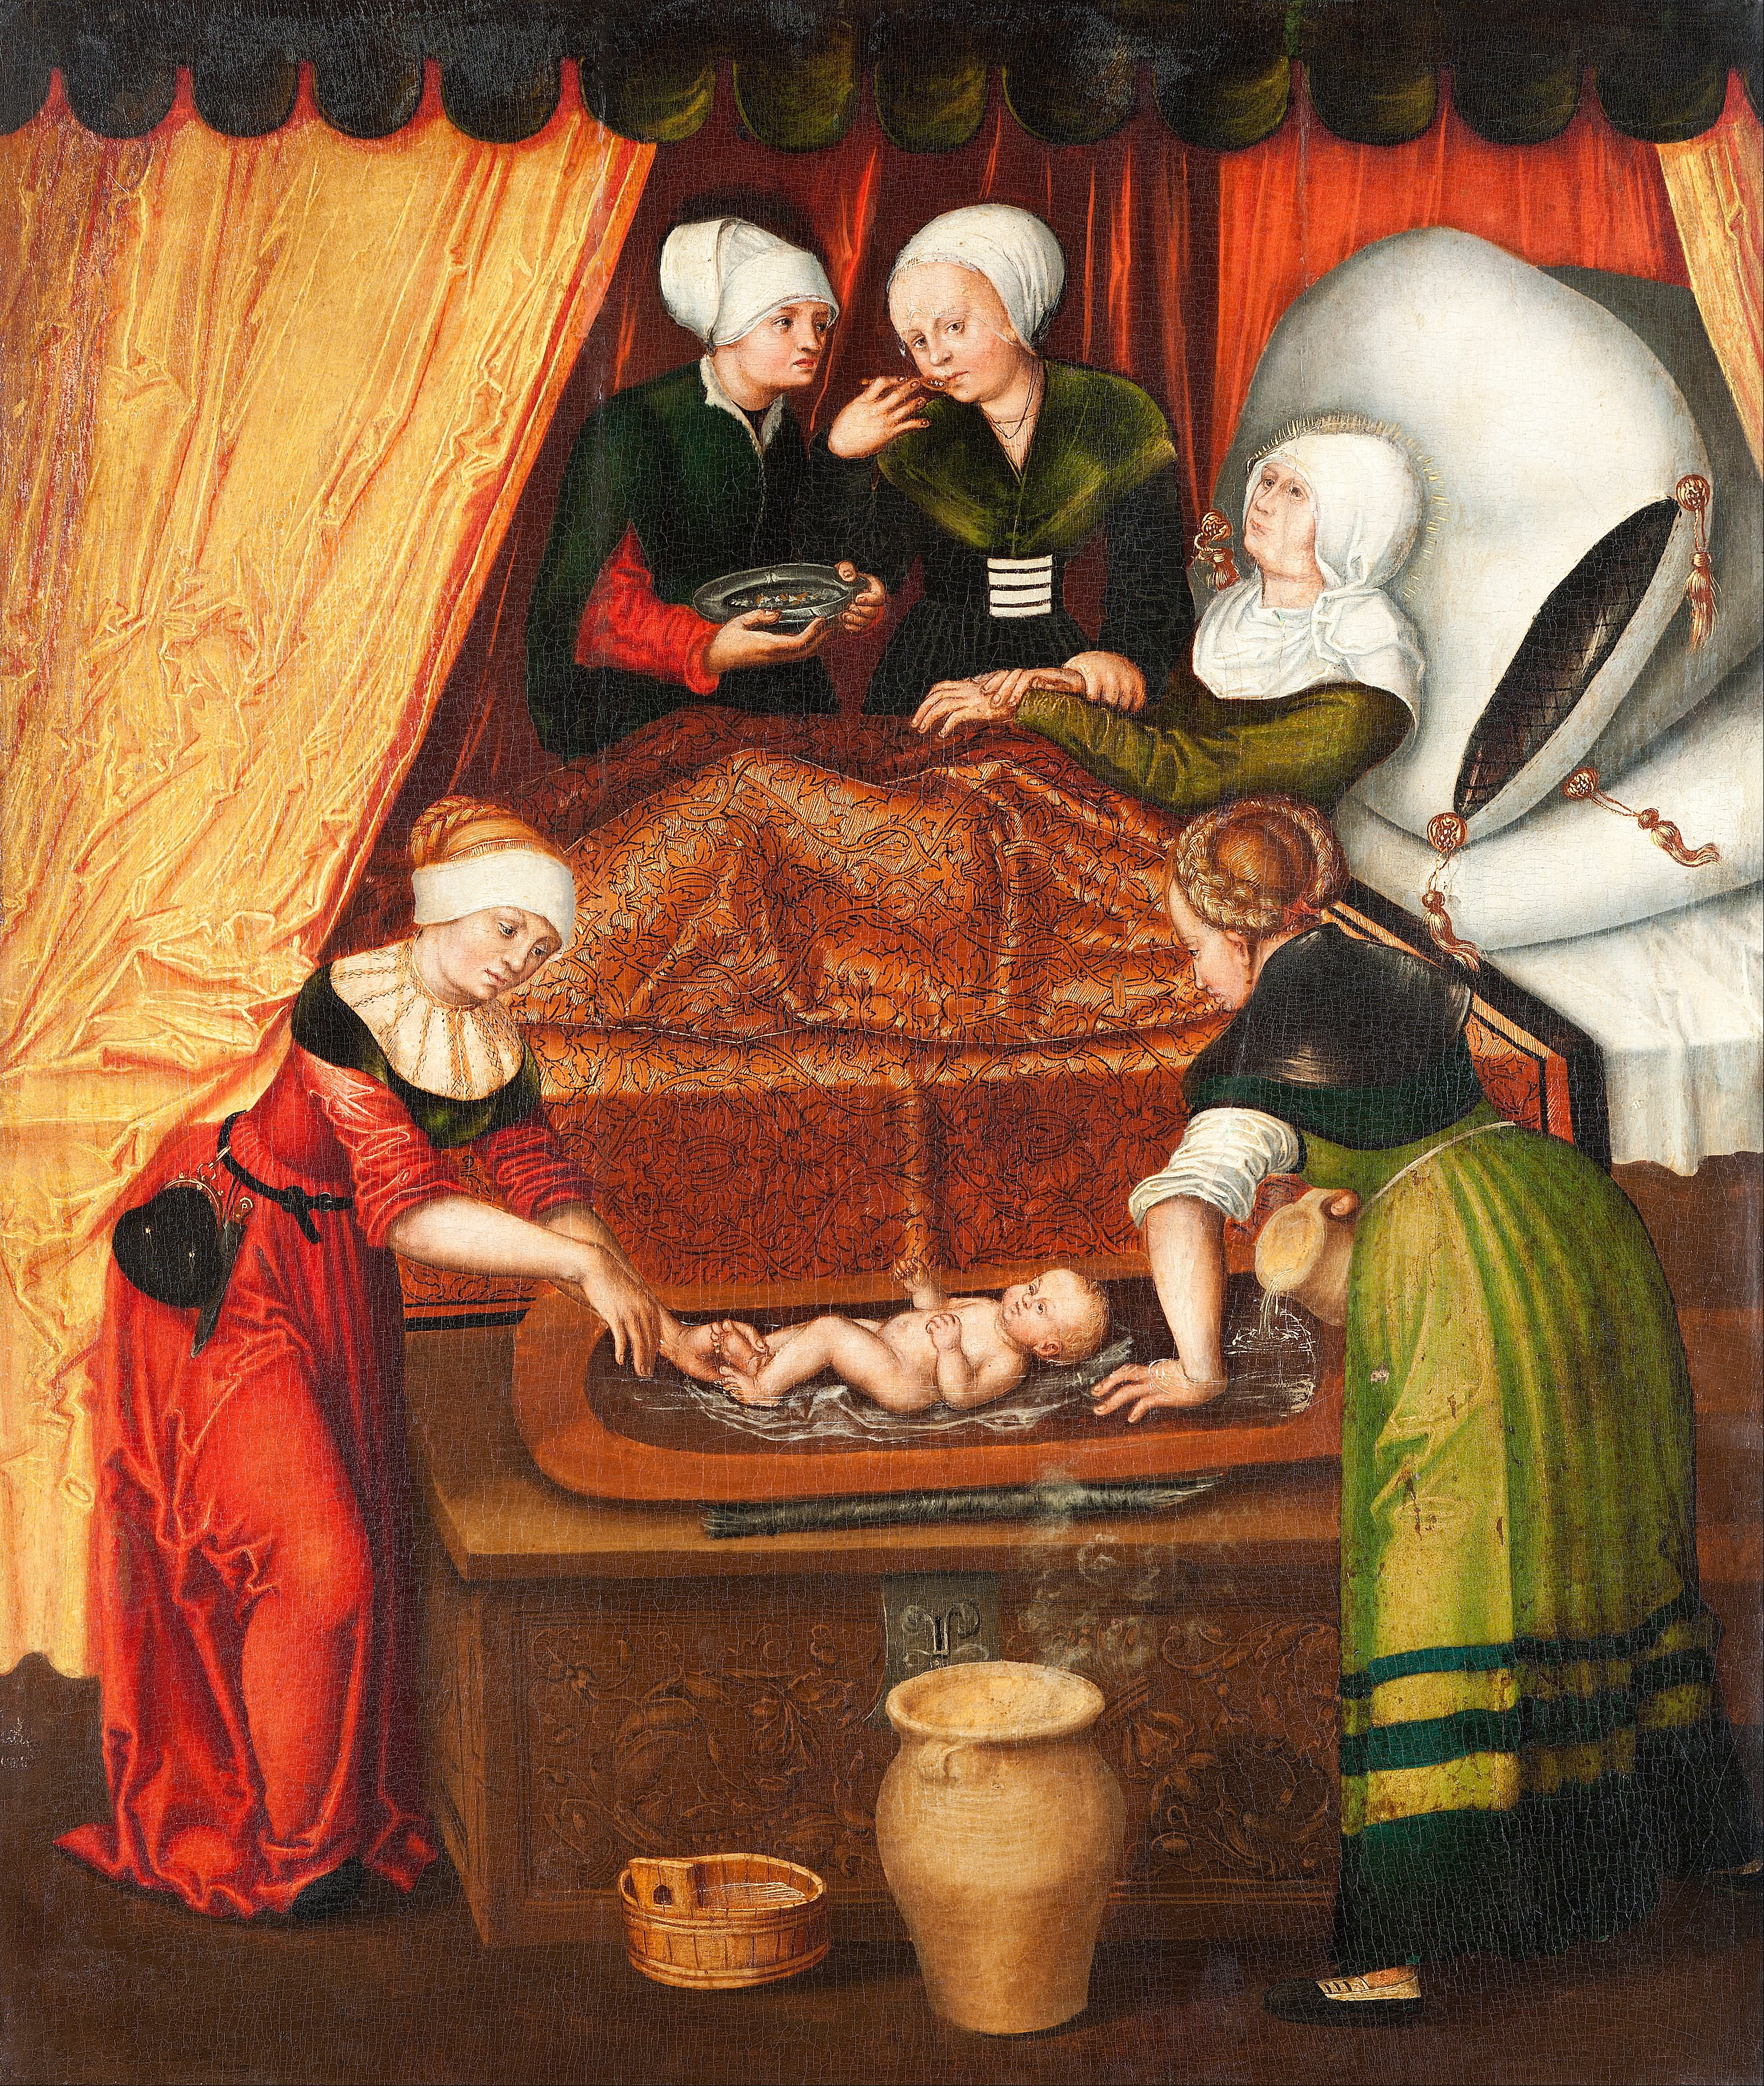 Lucas Cranach the Elder, his studio? - The Birth of John the Baptist - Google Art Project